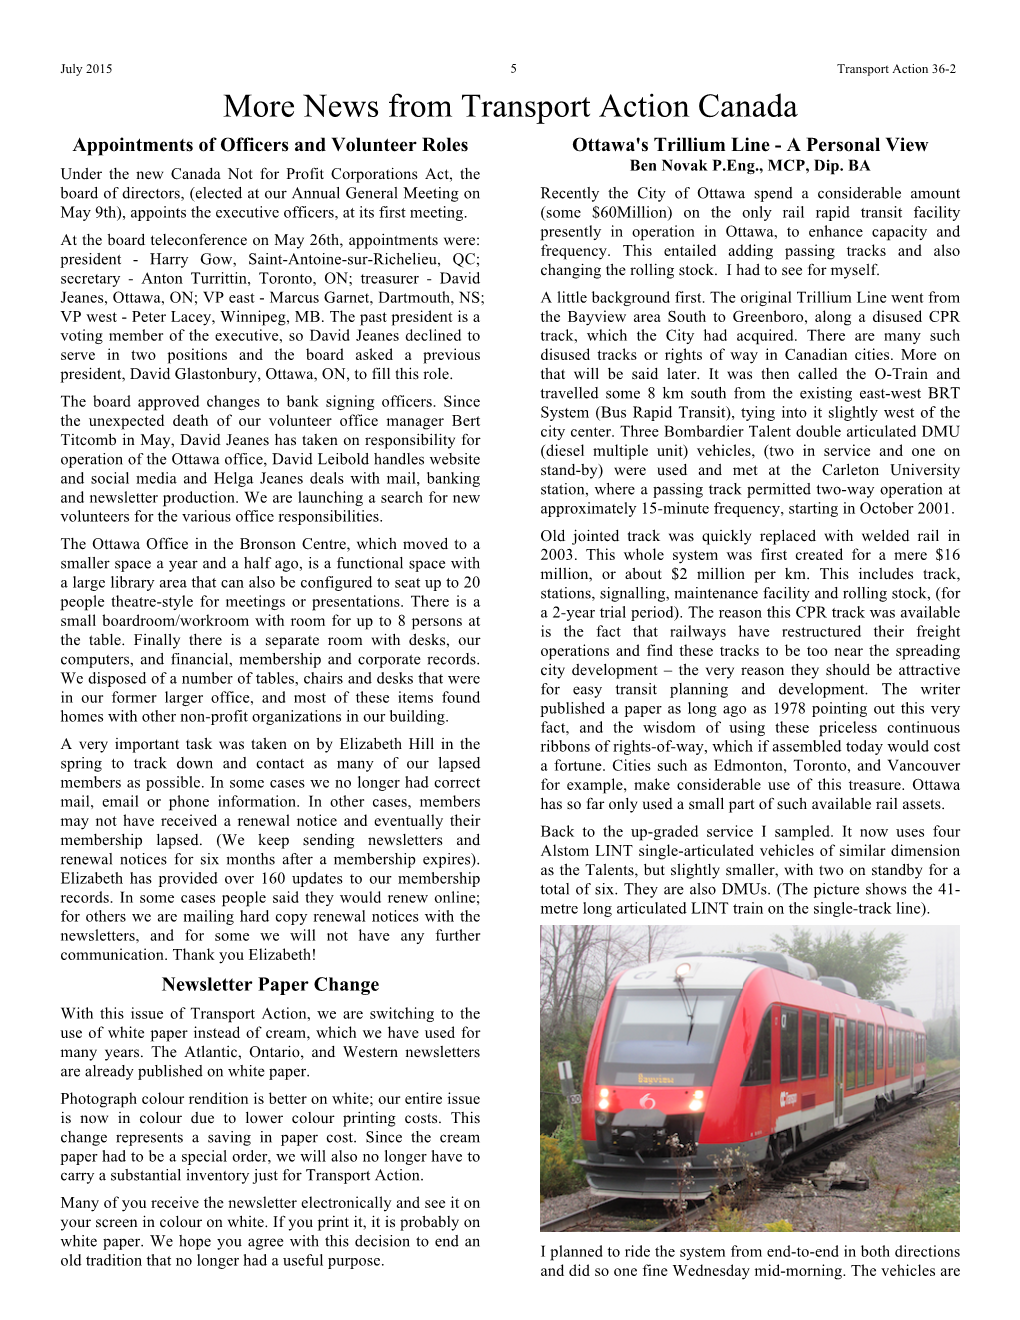 Transport Action Newsletter